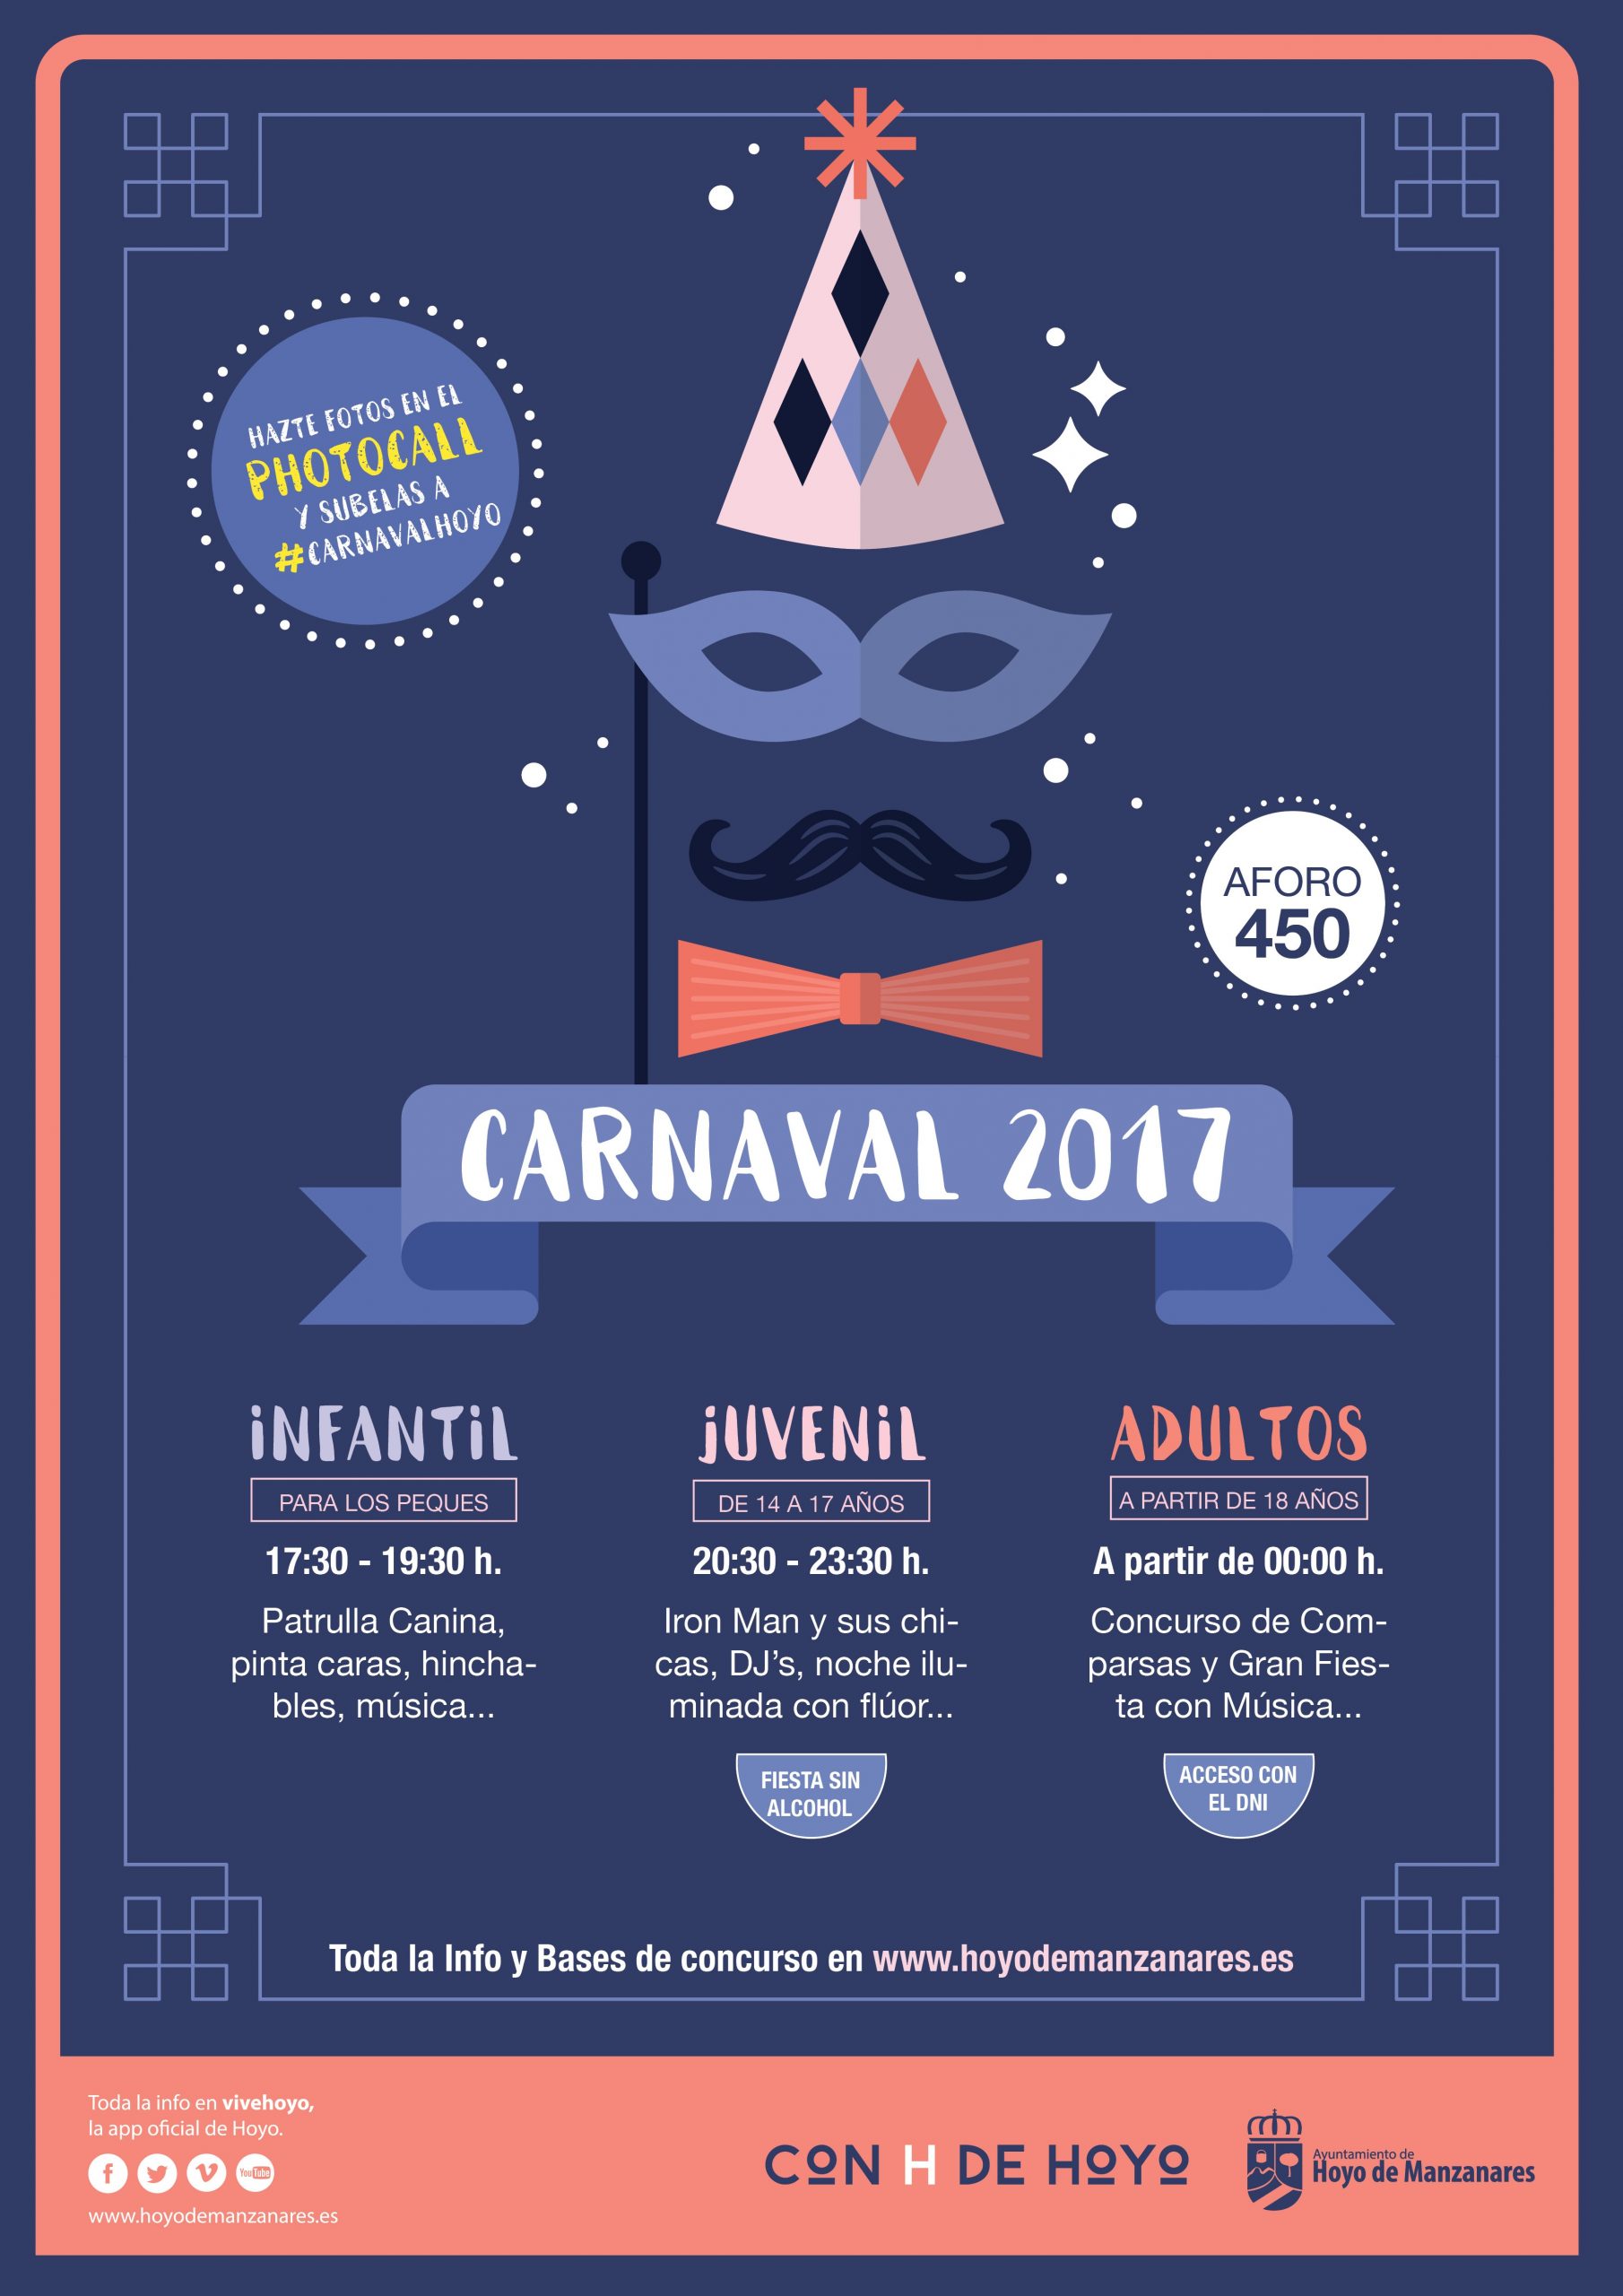 A3 carnaval 2017 ok